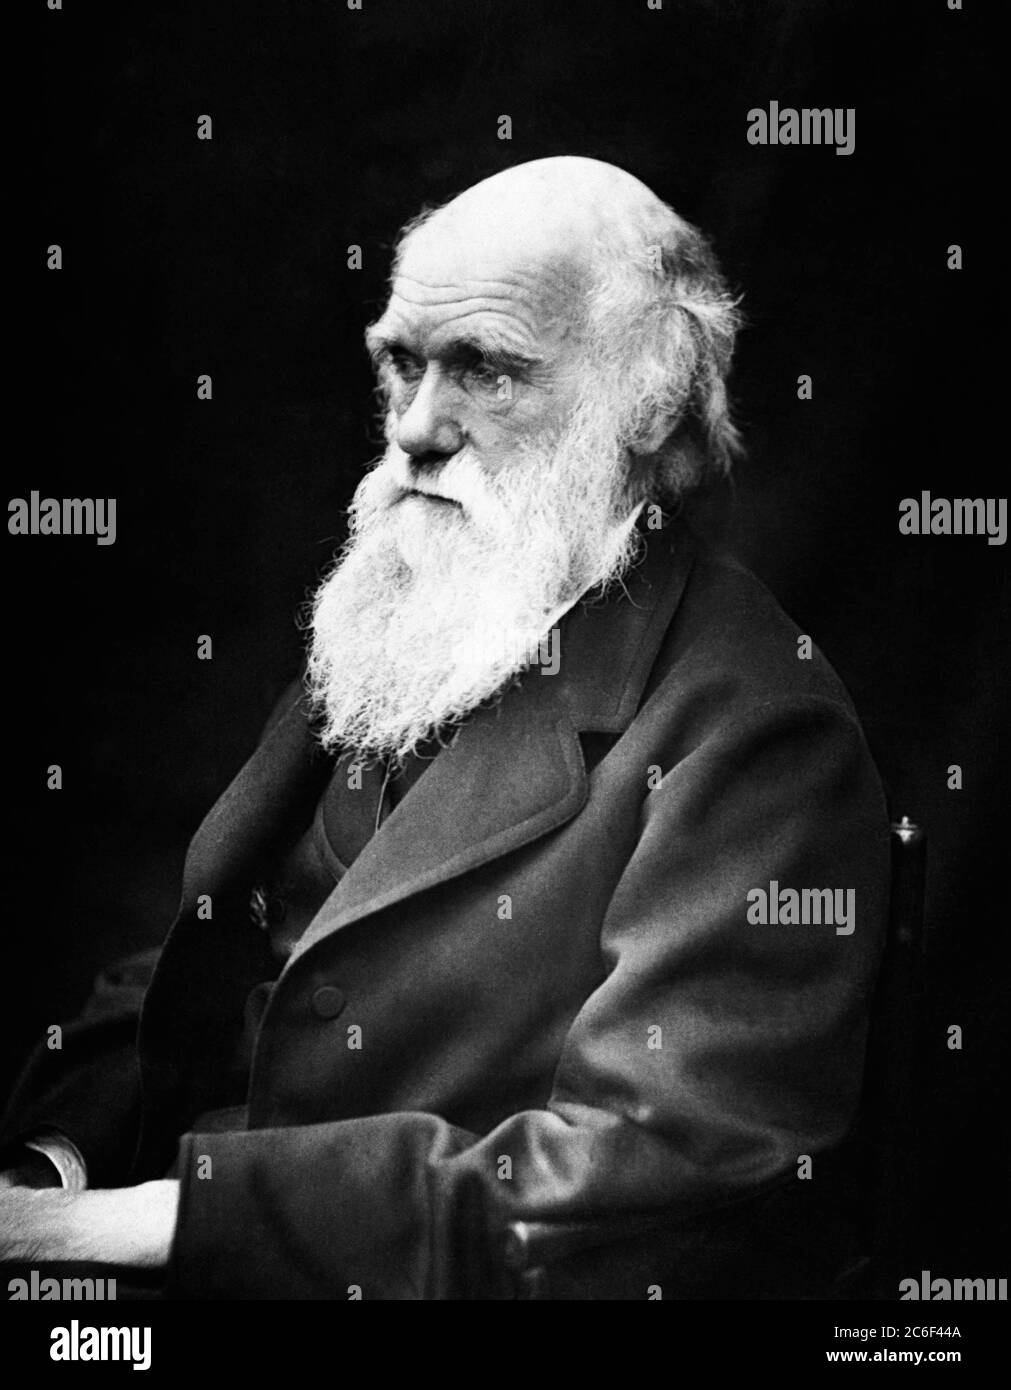 Charles Darwin, retrato familiar tomado en 1868 Foto de stock